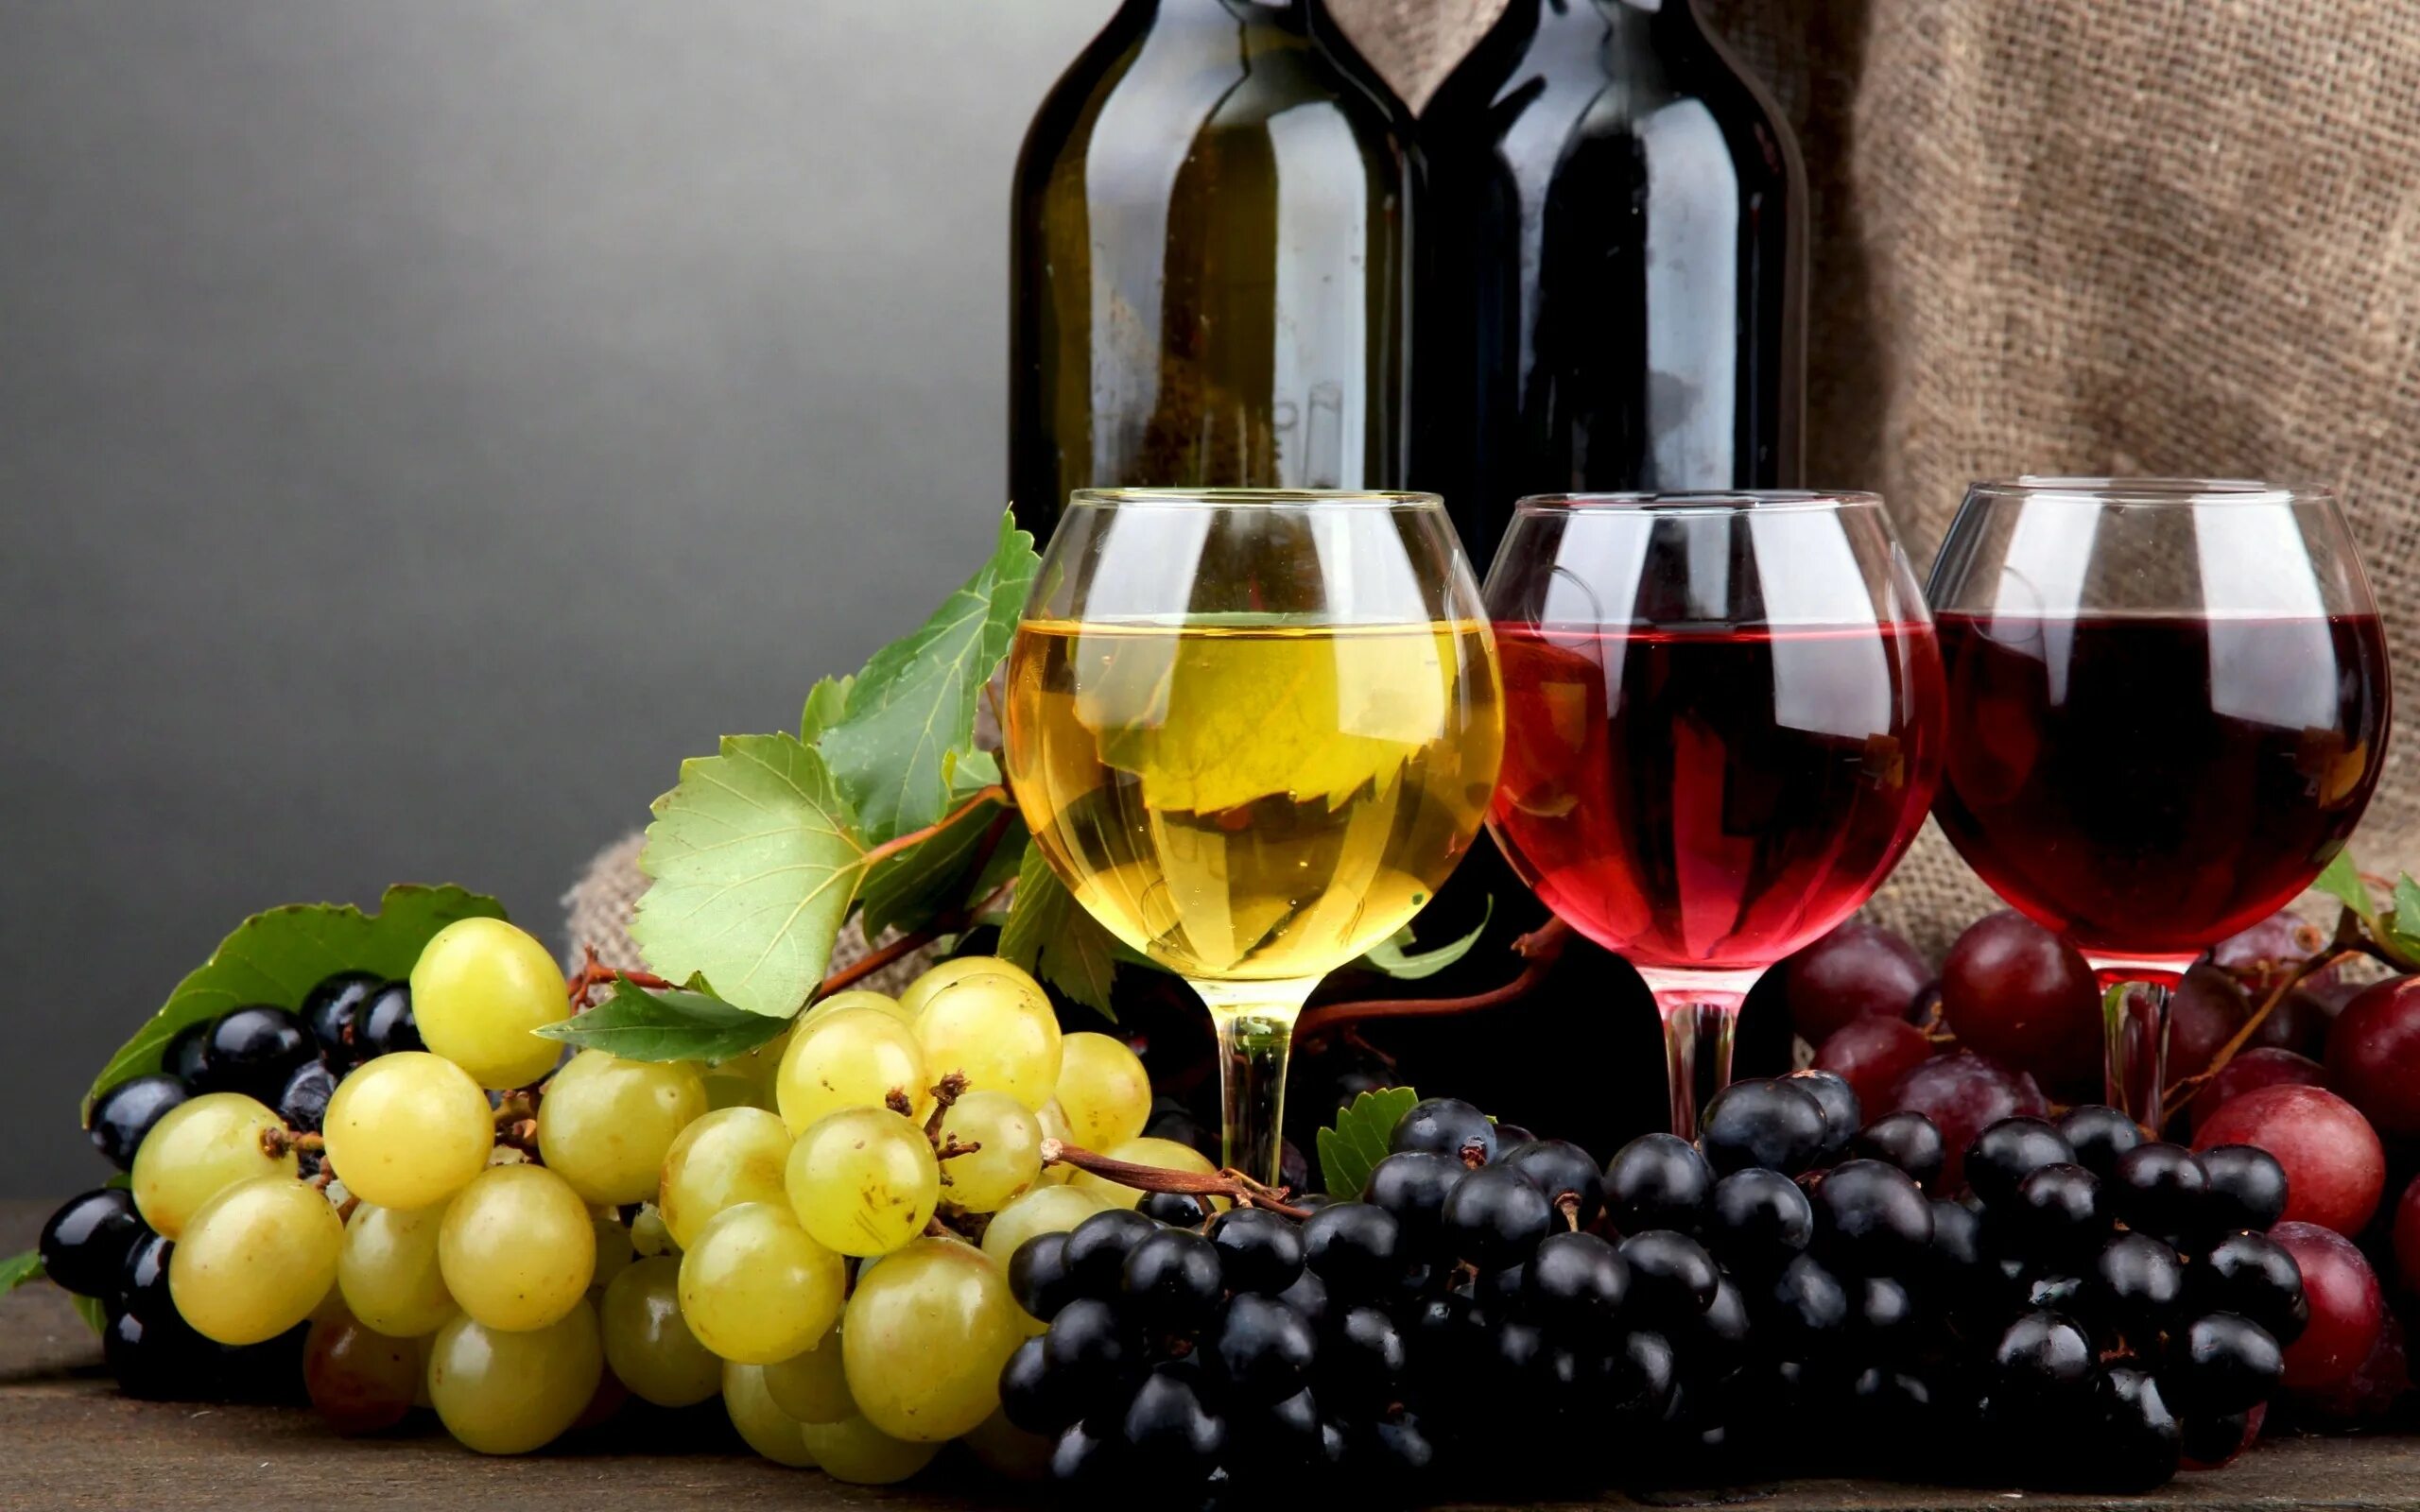 Молдавия виноградники и вино. Грузия vino vinograd. Красное вино. Бокал с вином. Вторая половина вина